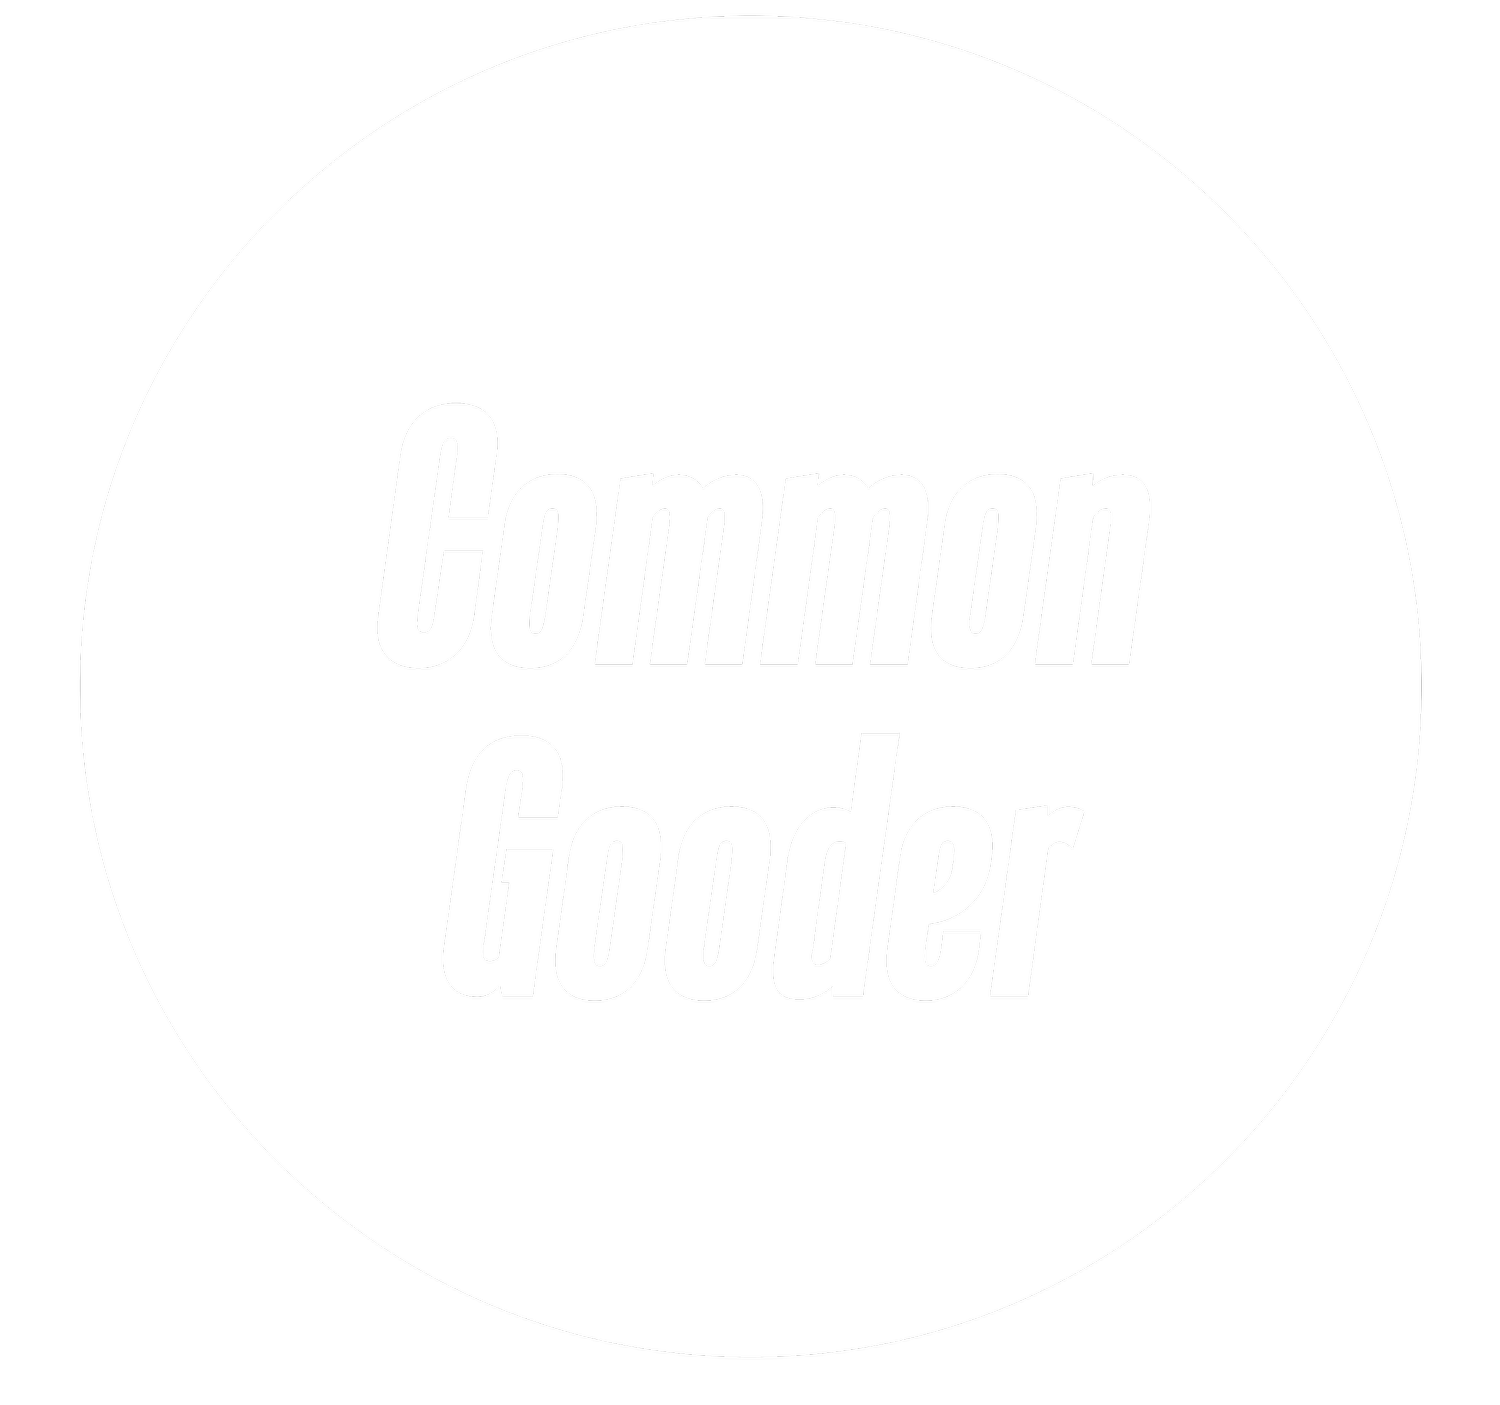 Common Gooder